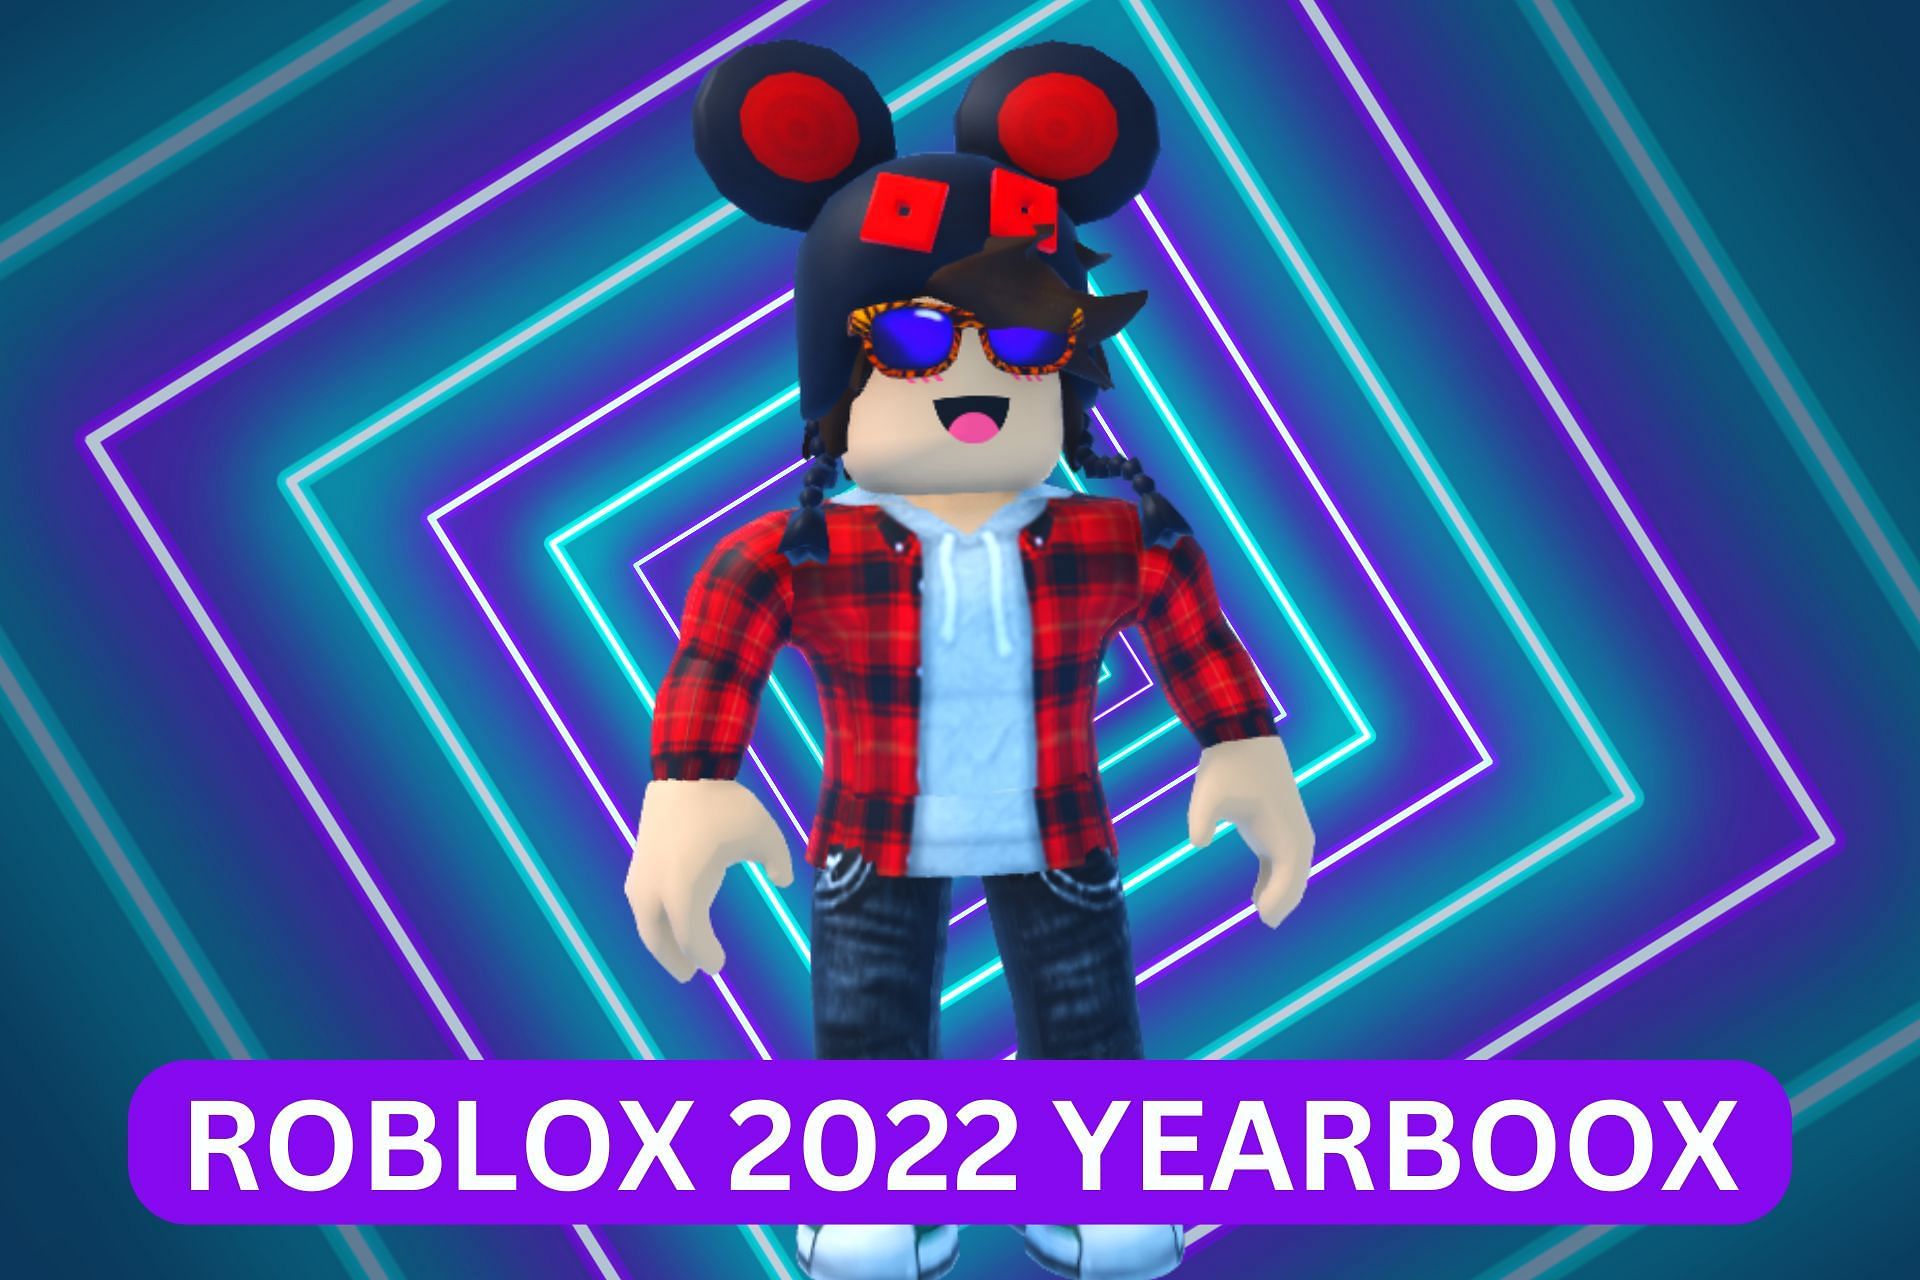 Start taking screenshots, 2022 Yearboox is here (Image via Sportskeeda)